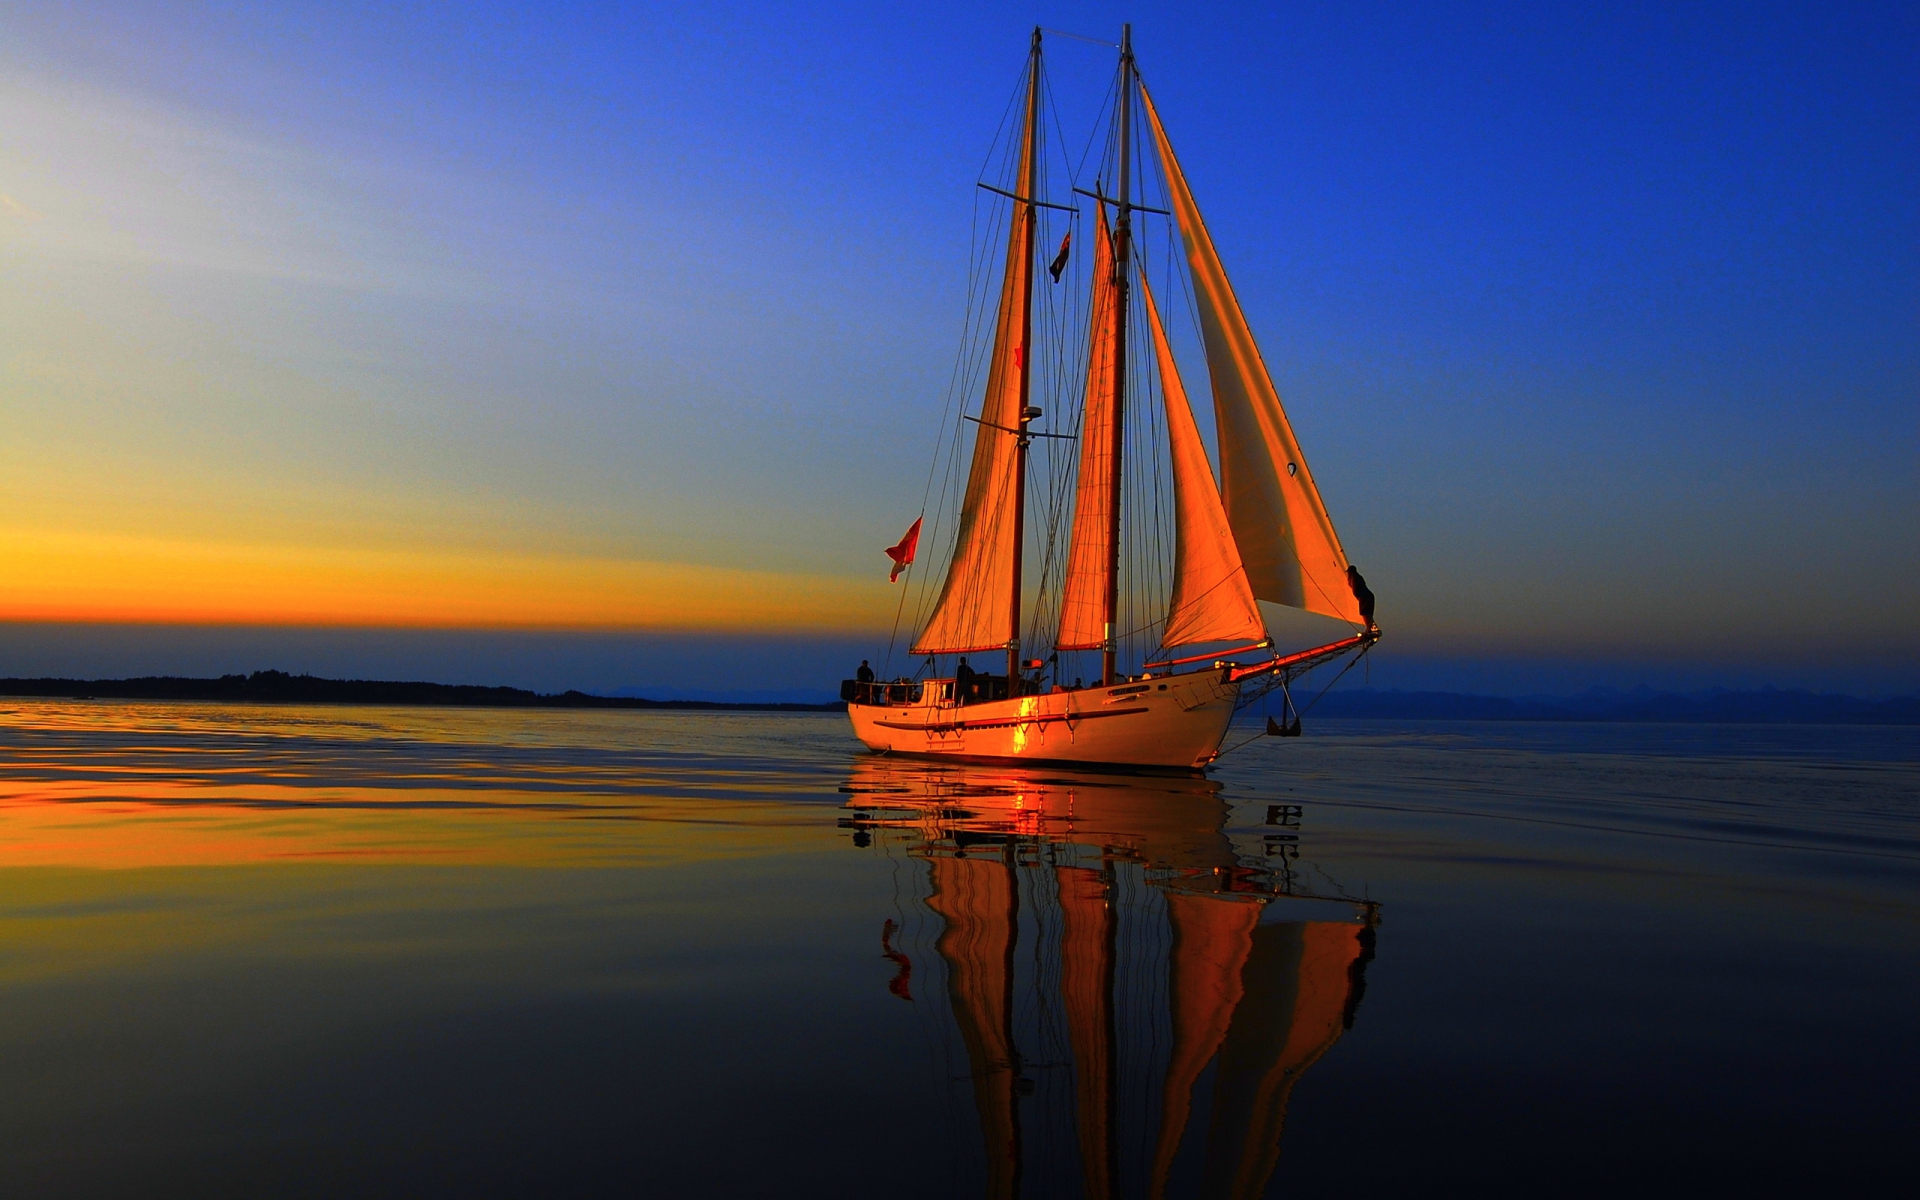 sailboat background images